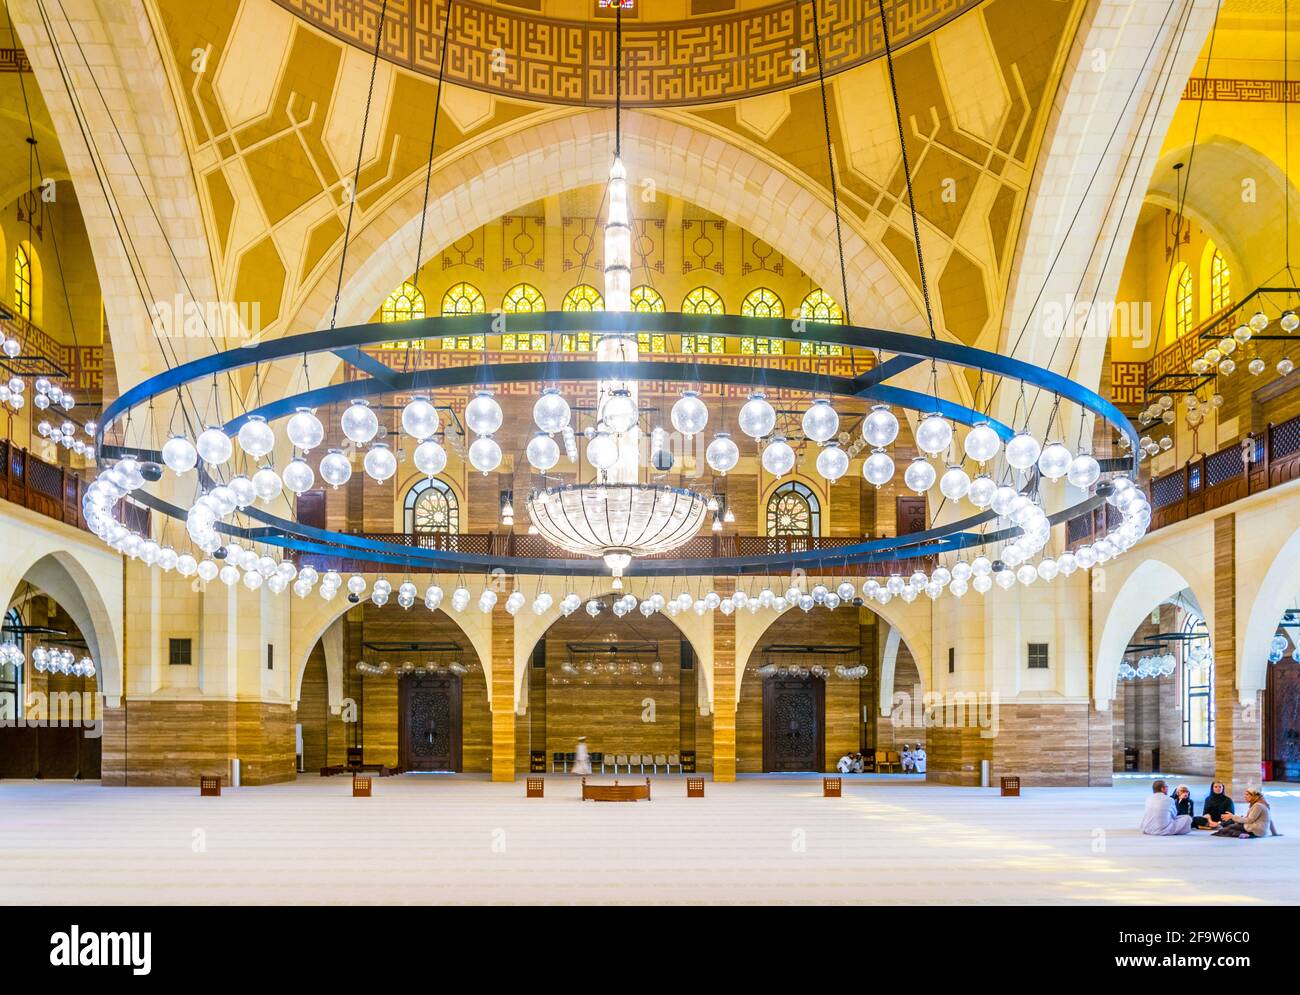 MANAMA, BAHRAIN, OCTOBER 23, 2016: Interior of the Al Fateh Grand Mosque in Manama, the capital of Bahrain. Stock Photo